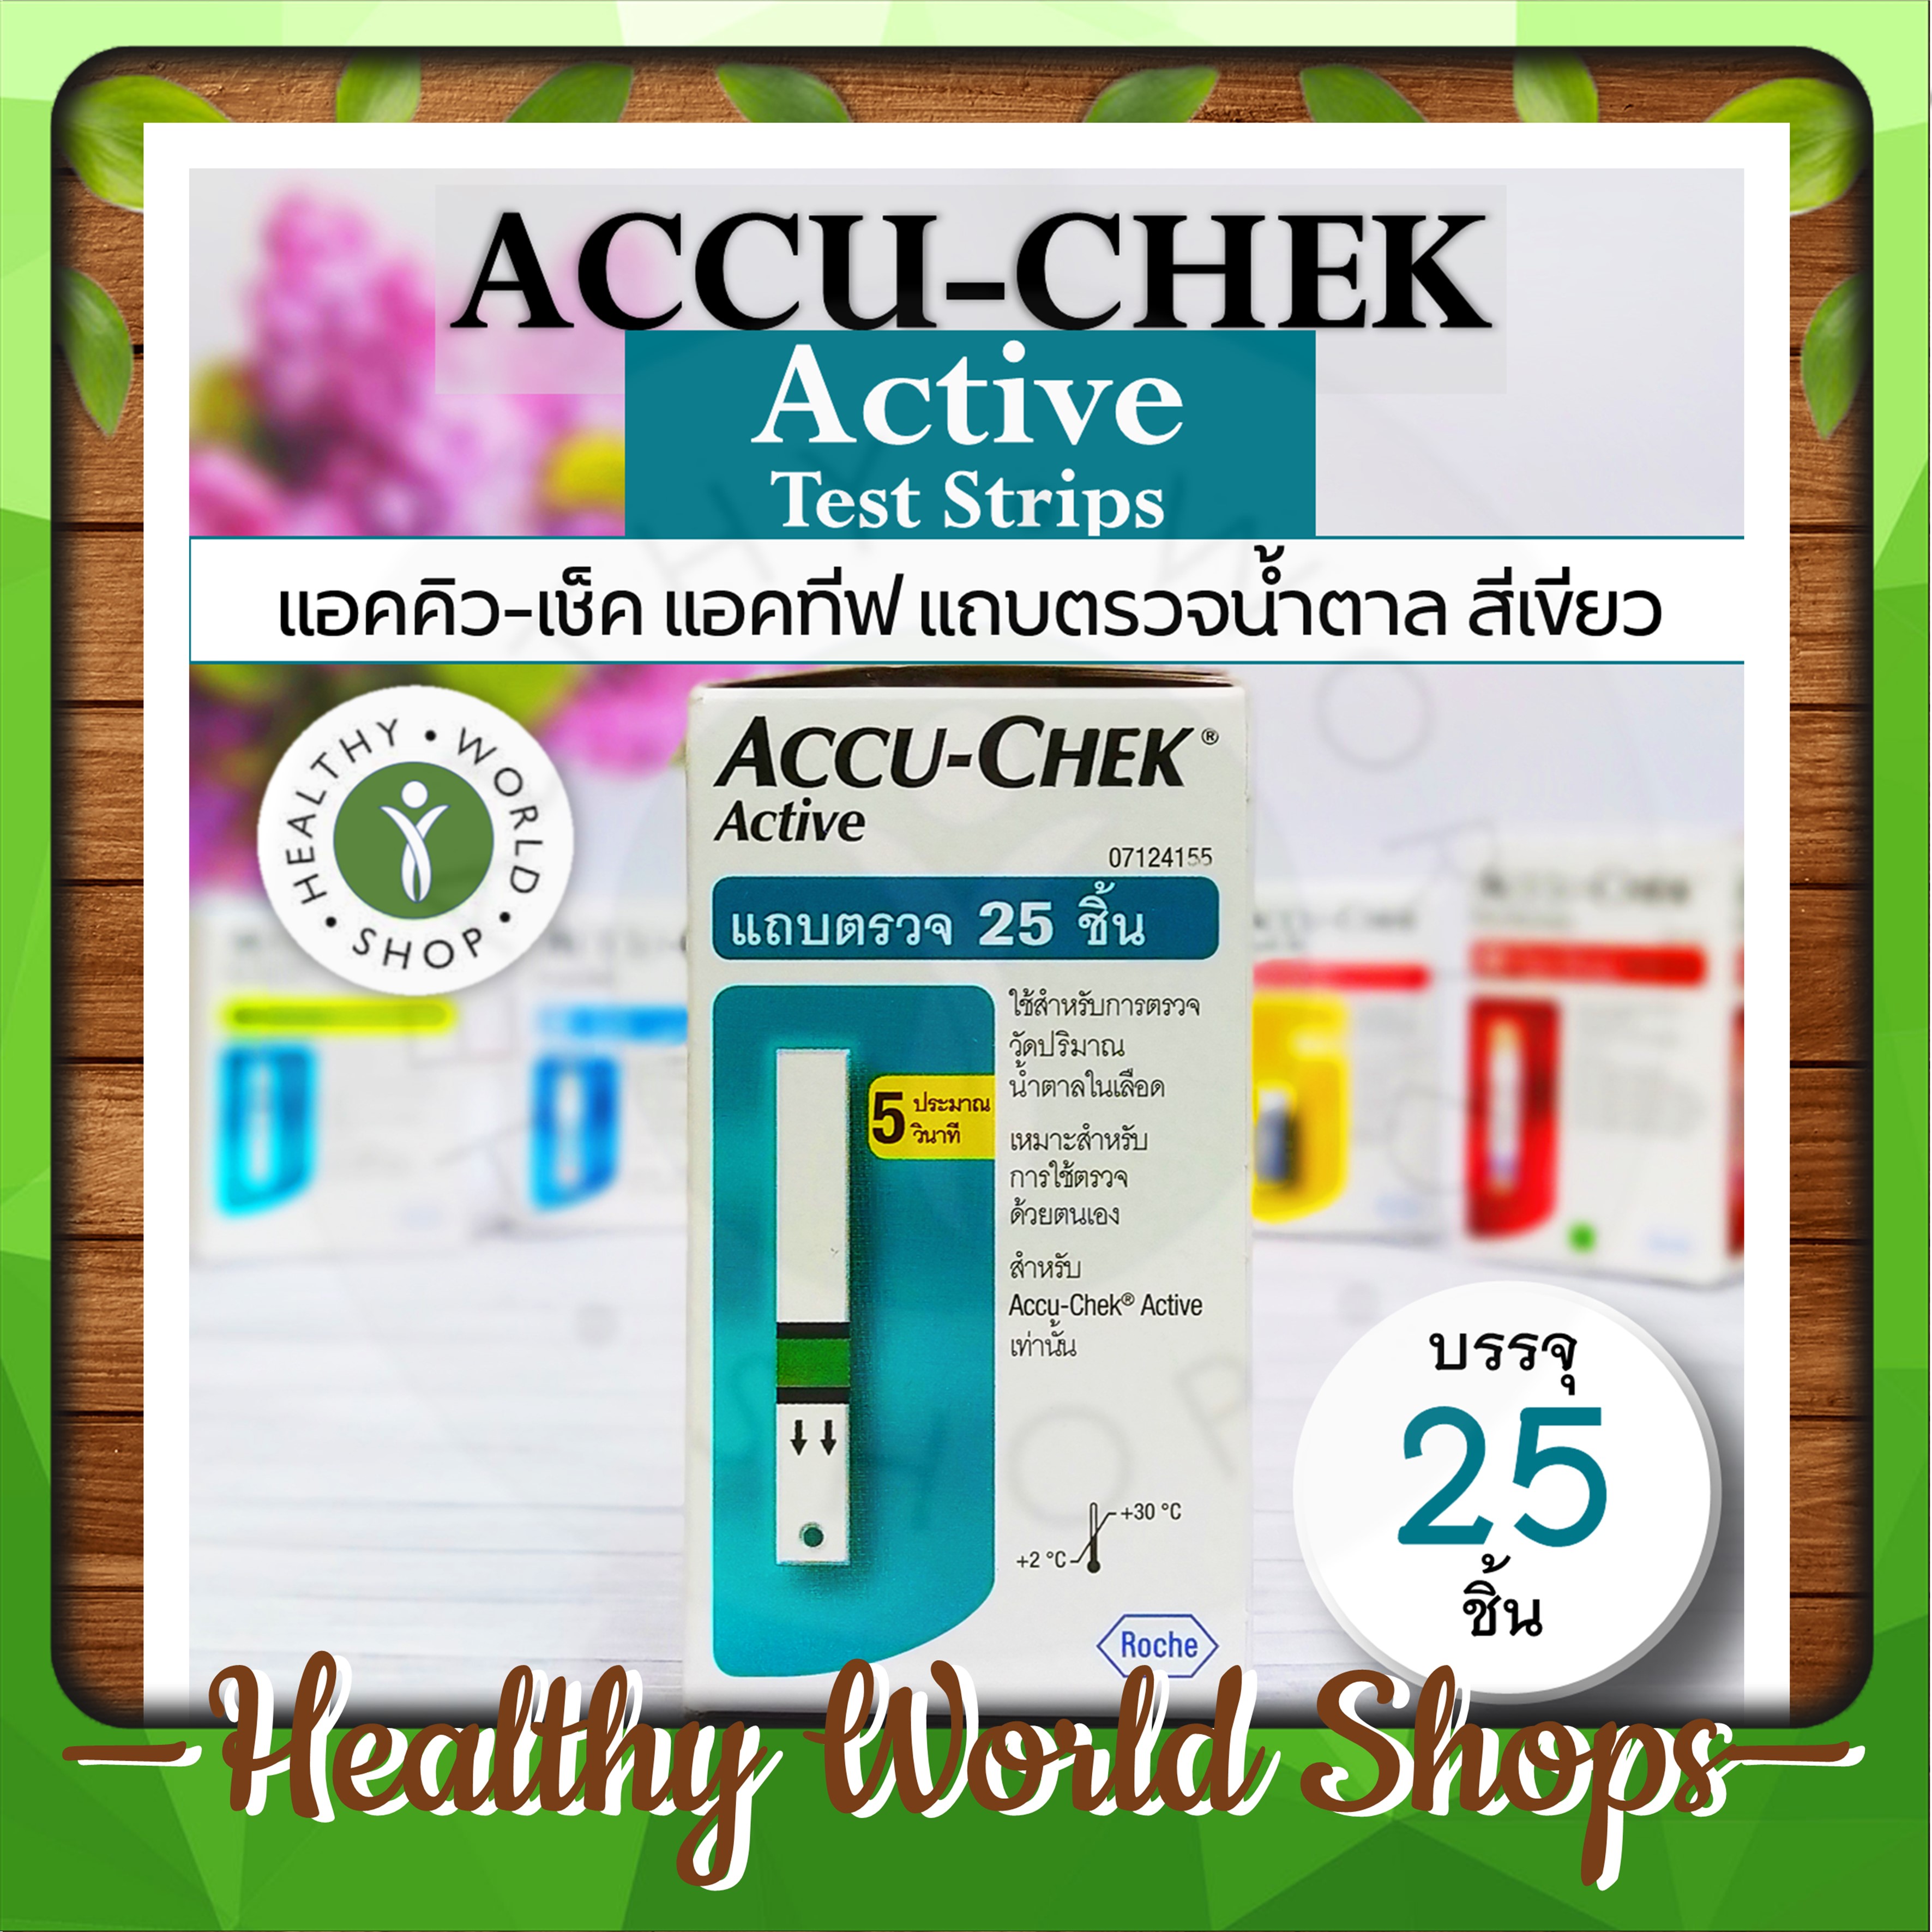 Accu-Chek Active Test Strips แอคคิว-เช็ค แอคทีฟแถบตรวจน้ำตาล ขนาดบรรจุ 25 ชิ้น